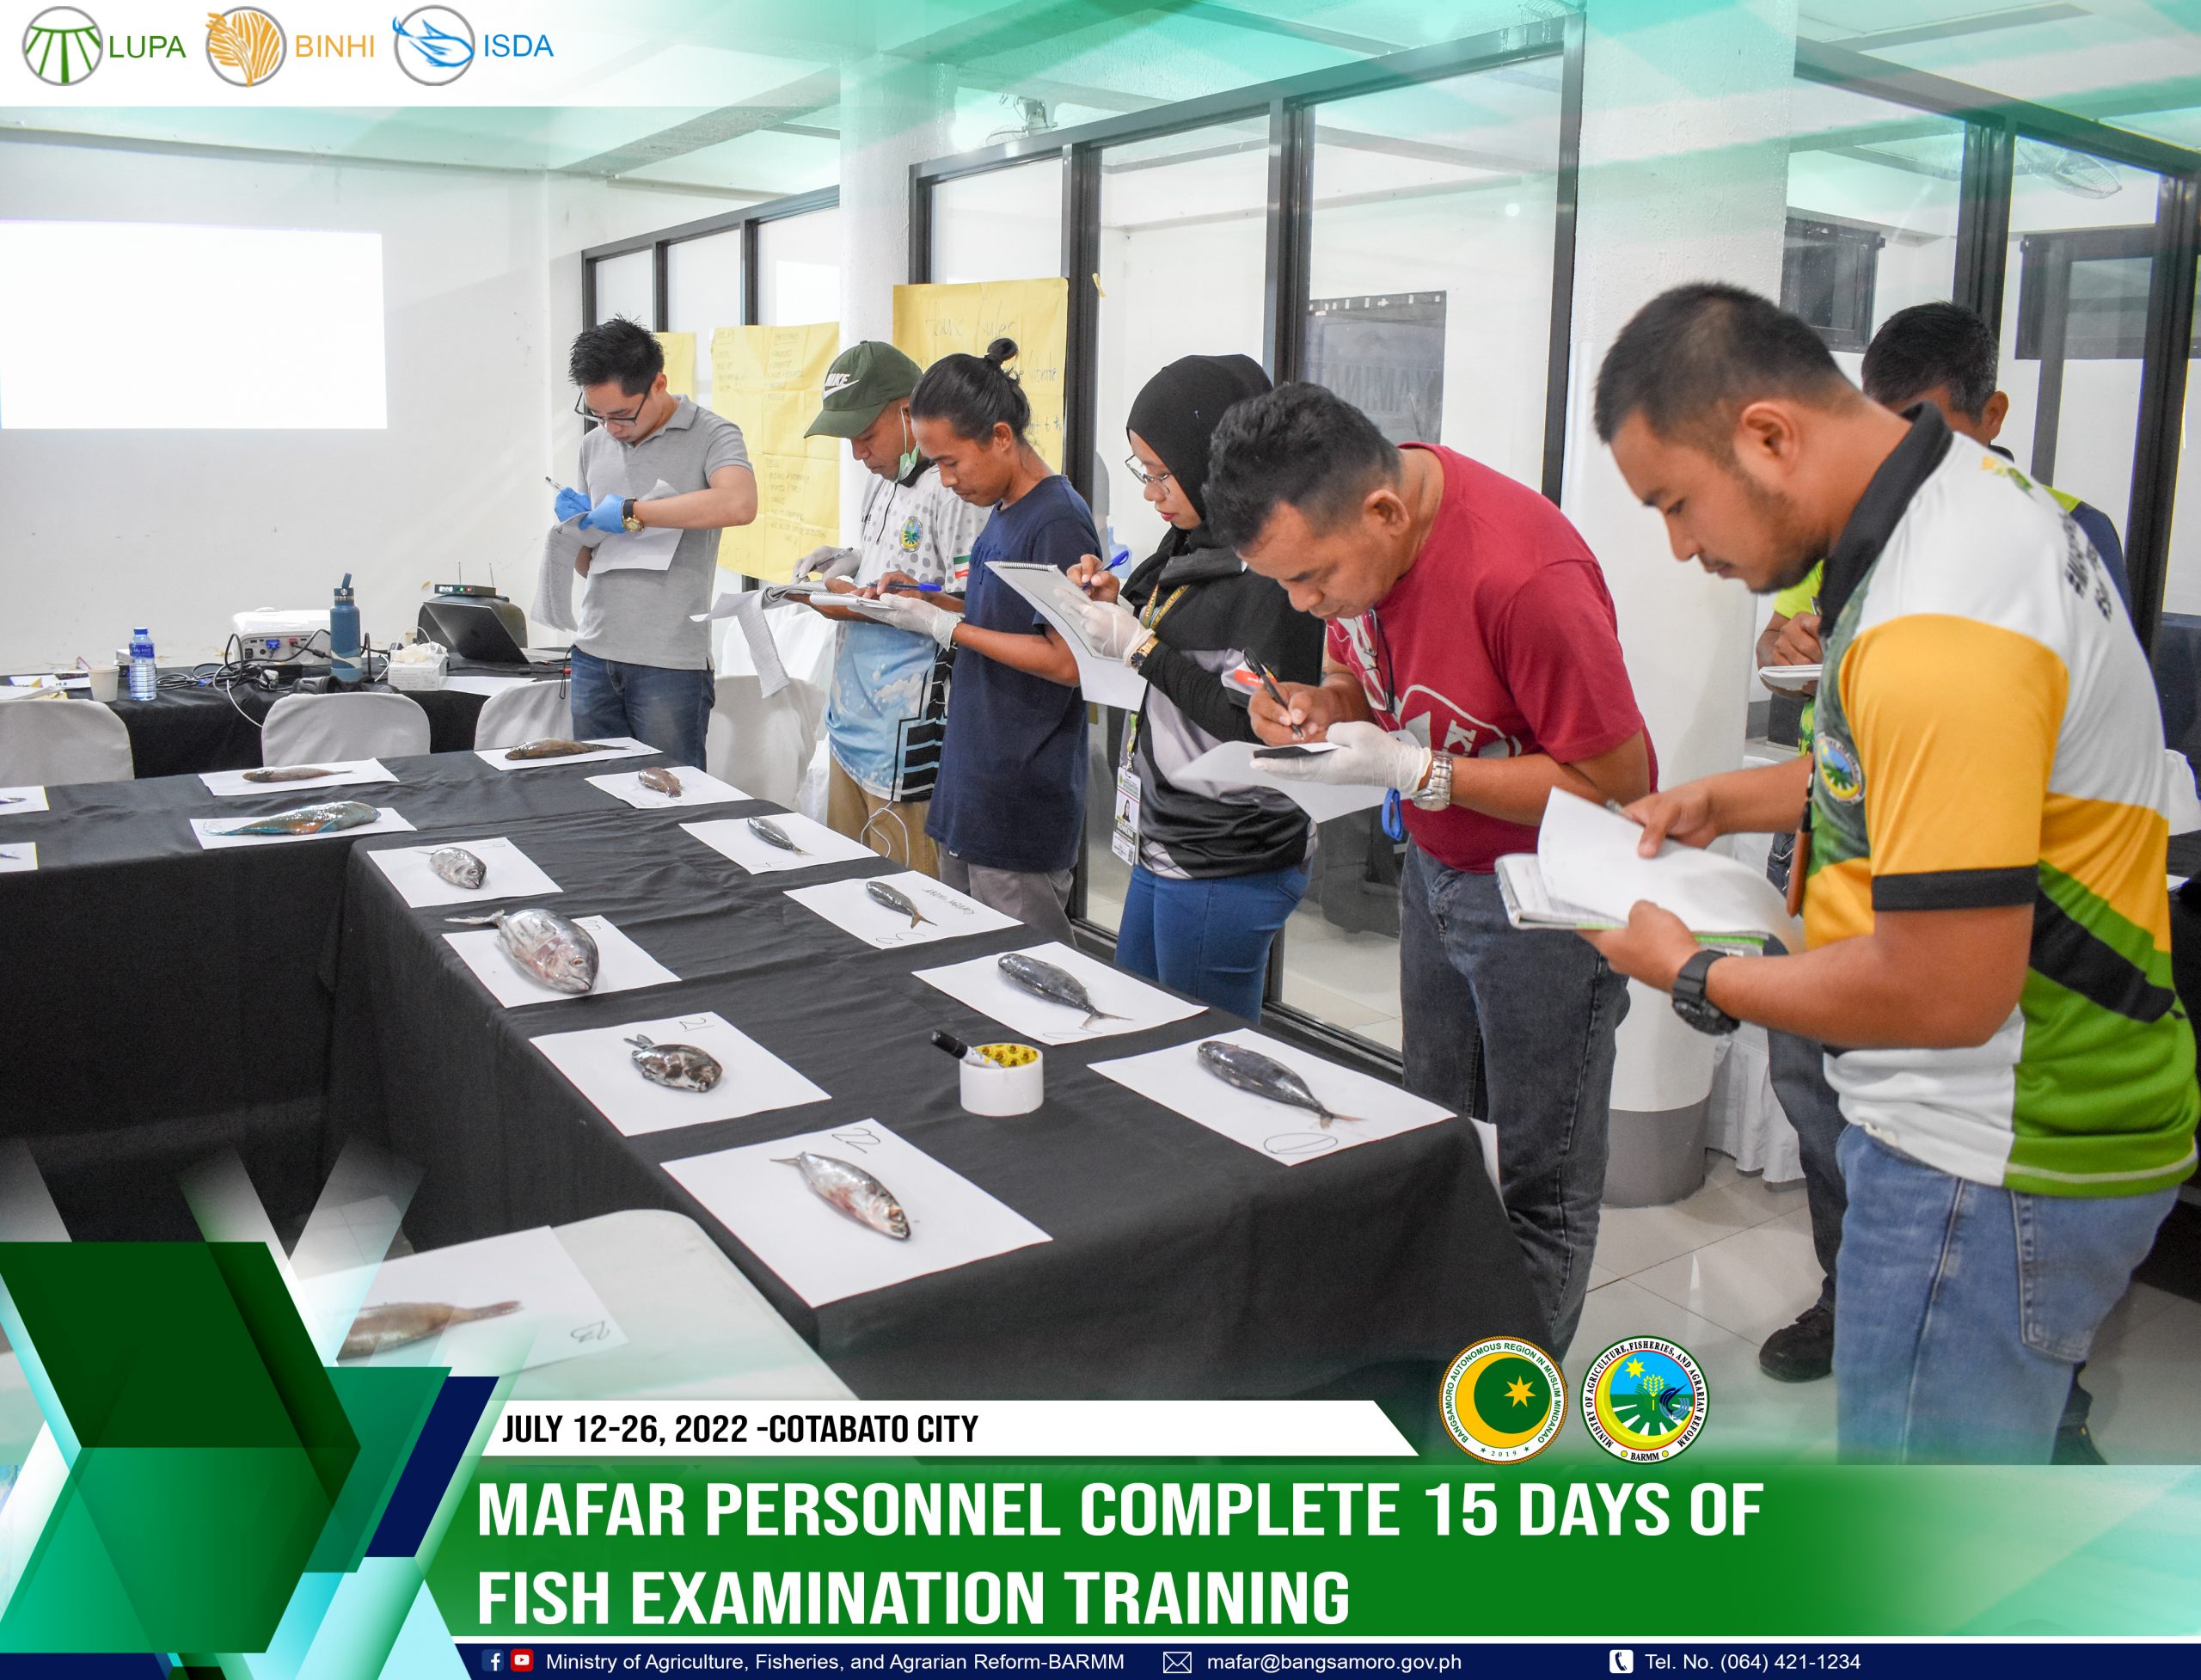 MAFAR personnel complete 15 days of Fish Examination Training